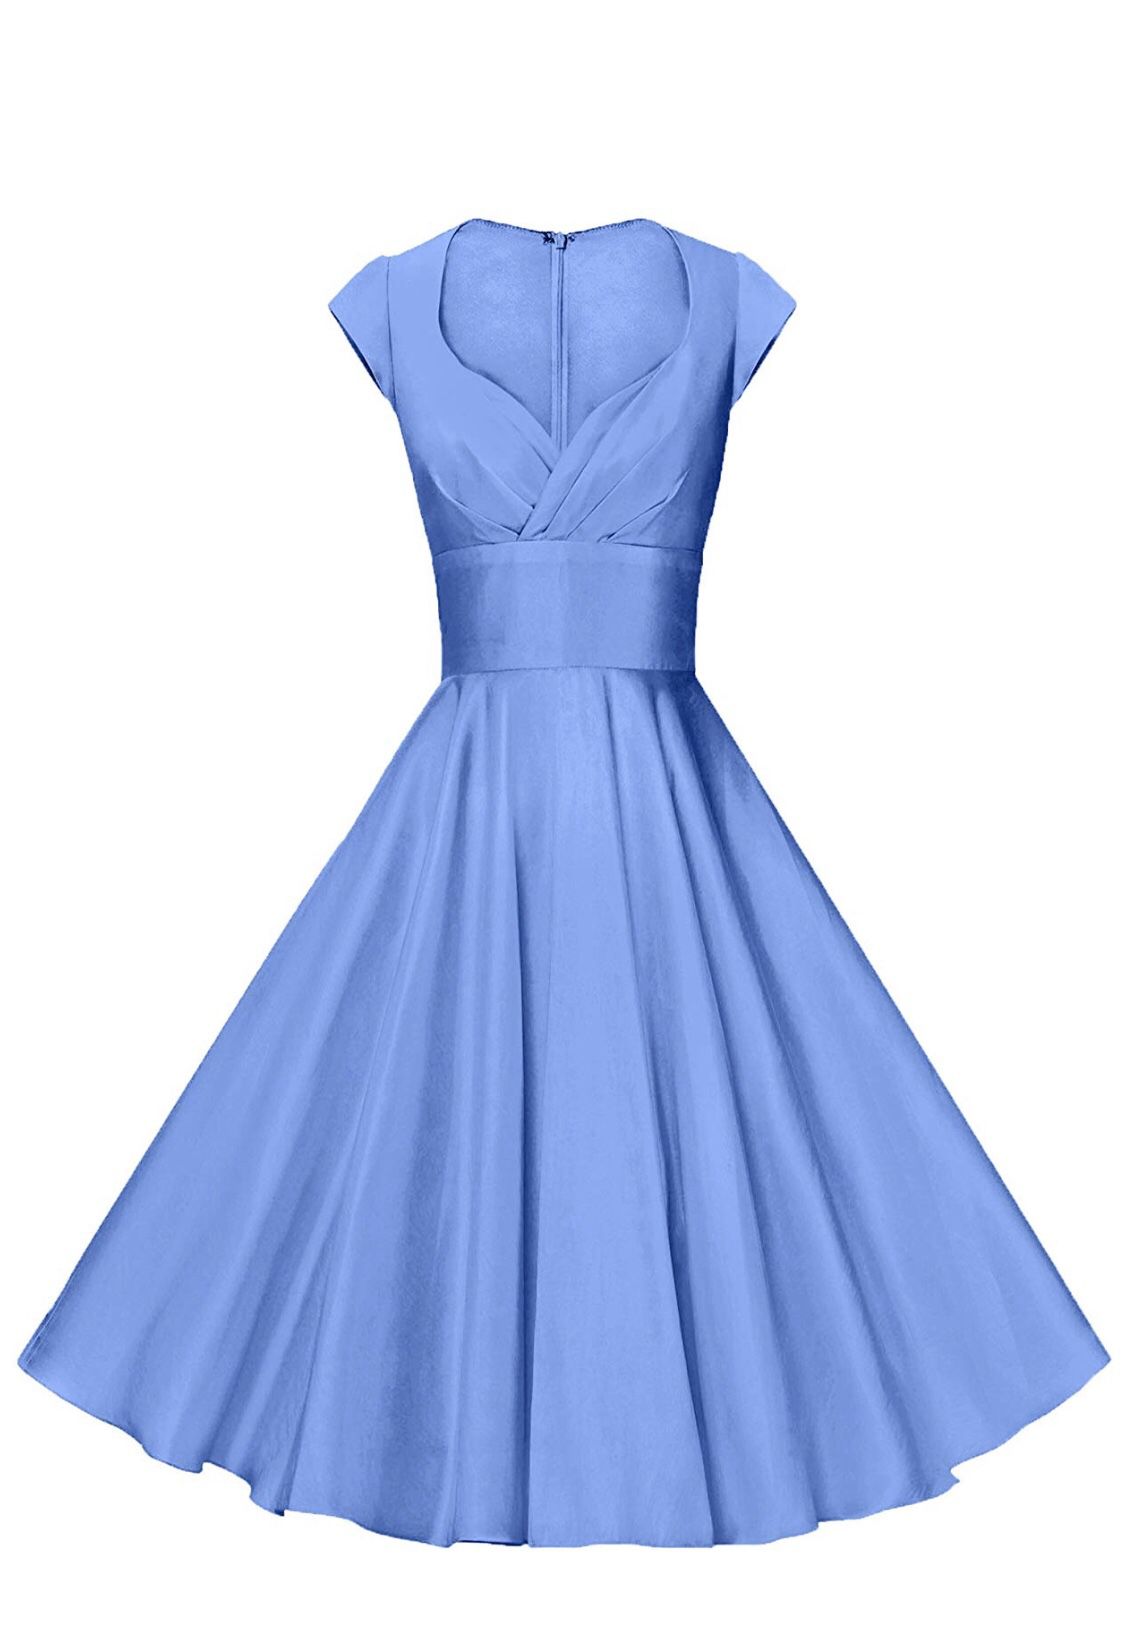 Periwinkle Blue women’s vintage 1950s swing cocktail dress.